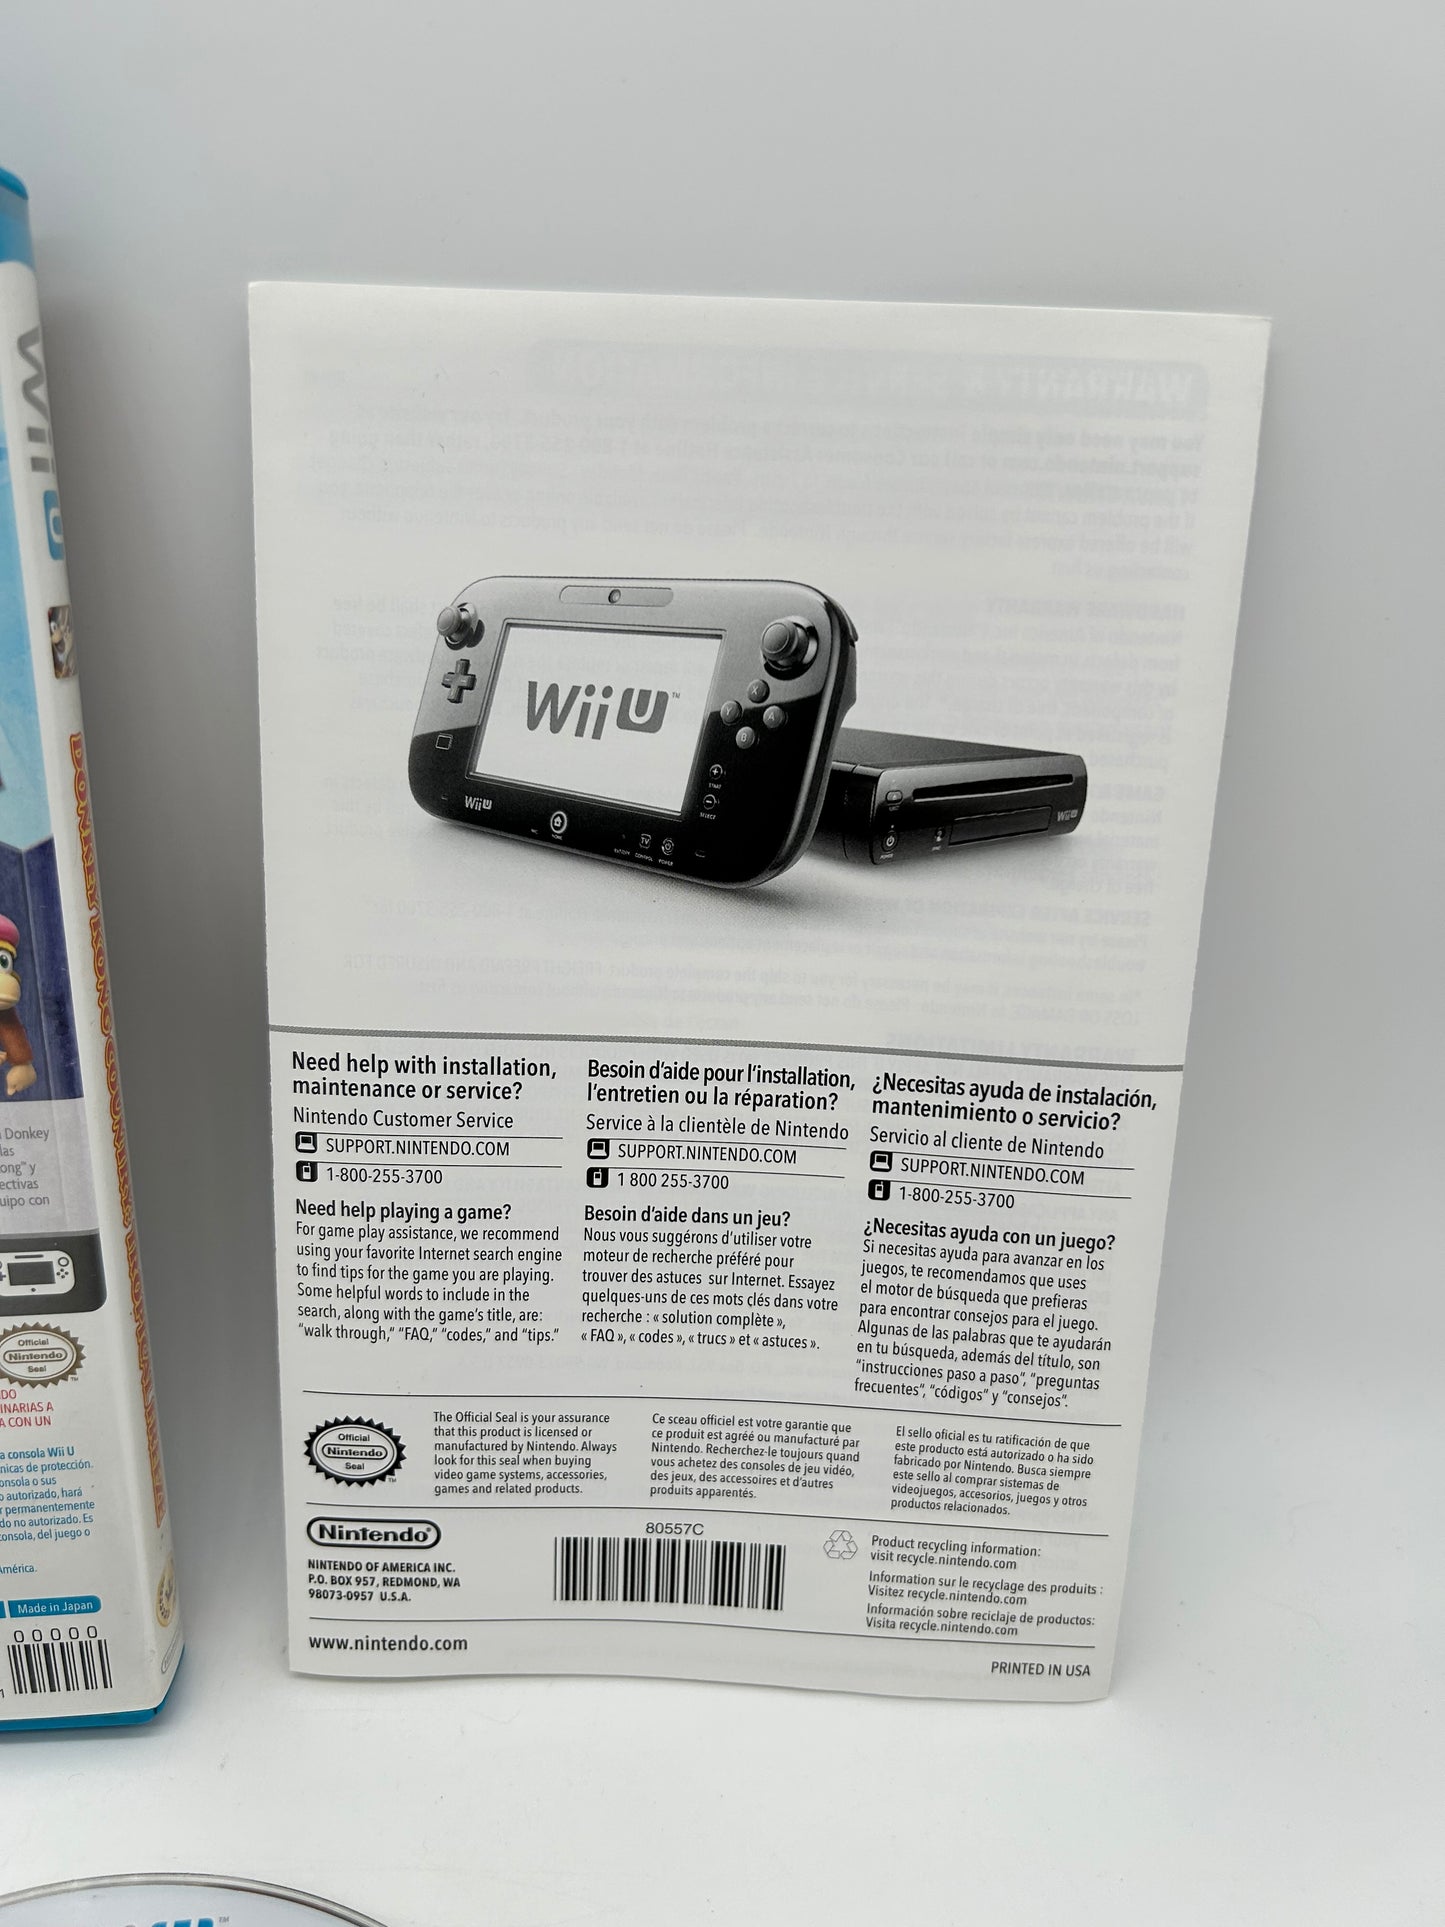 NiNTENDO Wii U | DONKEY KONG TROPiCAL FREEZE | NiNTENDO SELECTS